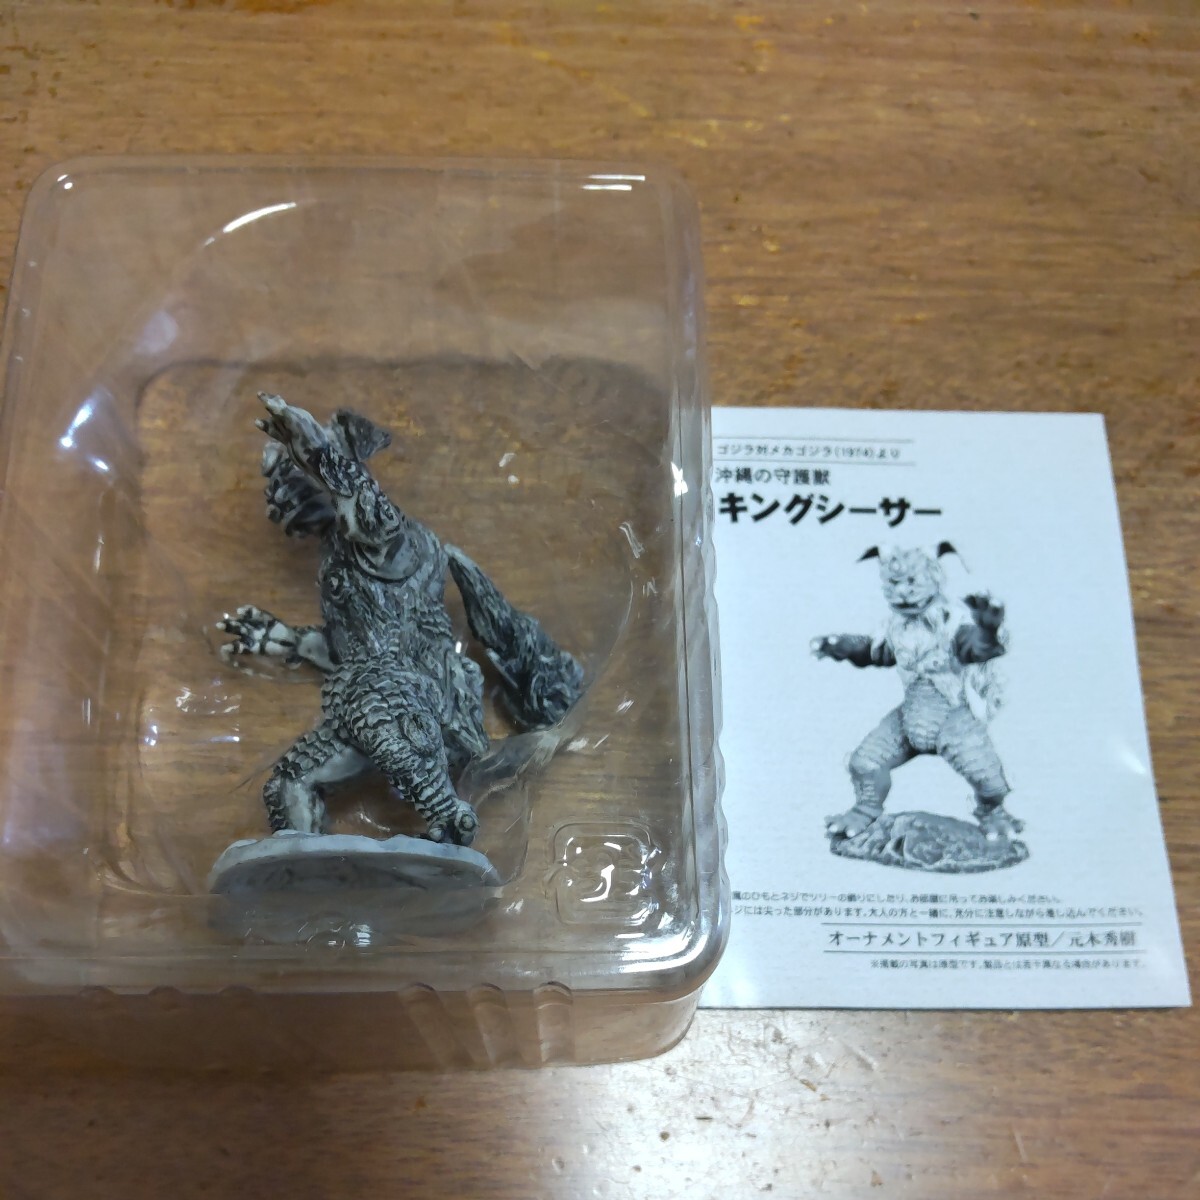  King si-sa- monochrome steel version Godzilla special effects large various subjects iwakla cast Gamera, Ultraman etc. 